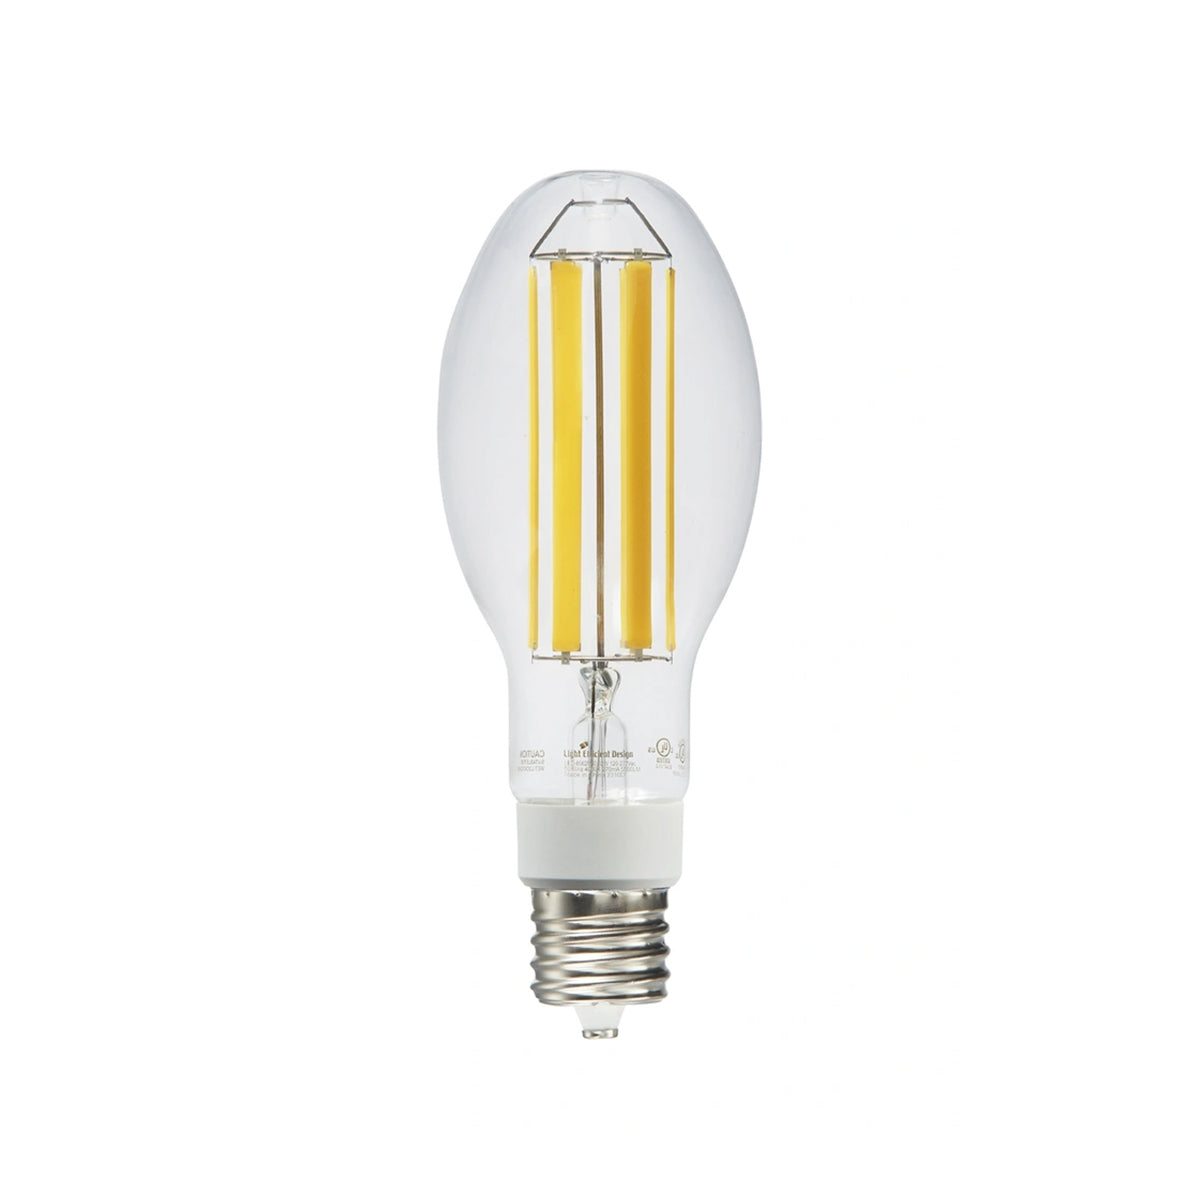 ED23 Filament Style Retrofit Bulb, 150W HID, 28 Watt, 4000 Lumens, 5000K, E26 Medium Base, Clear Finish